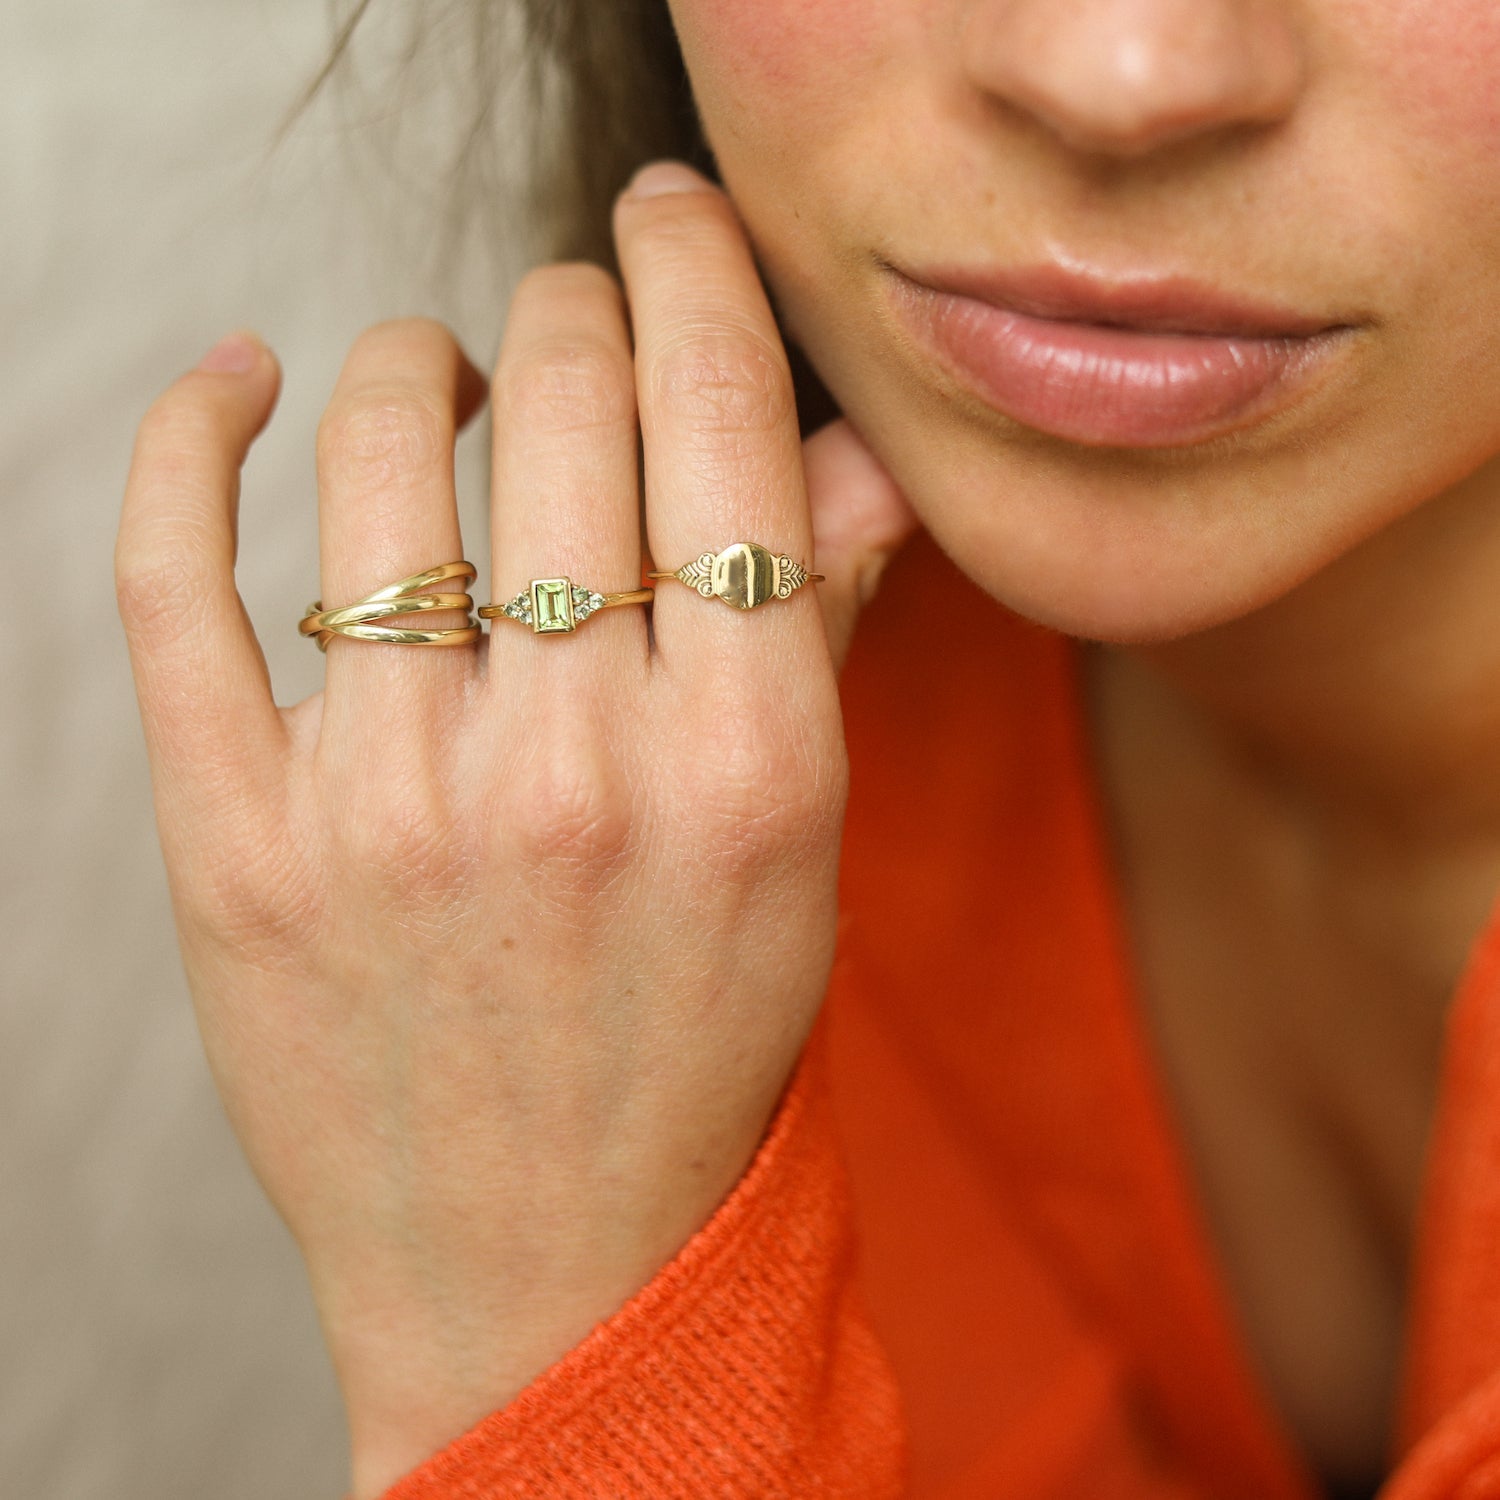 Vintage Peridot Ring